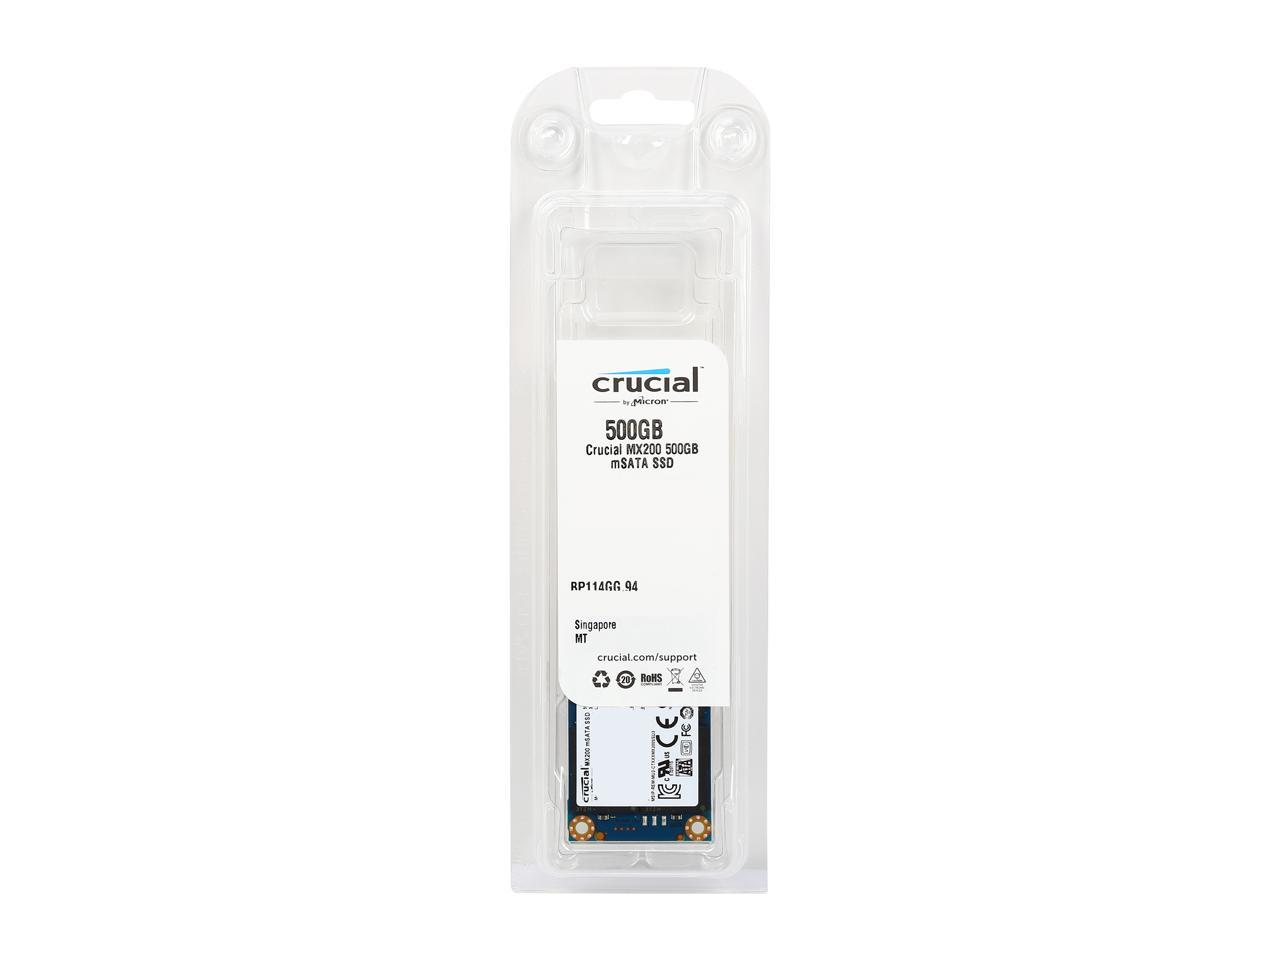 Crucial MX200 mSATA 500GB SATA 6Gbps (SATA III) Micron 16nm MLC NAND Internal Solid State Drive (SSD) CT500MX200SSD3